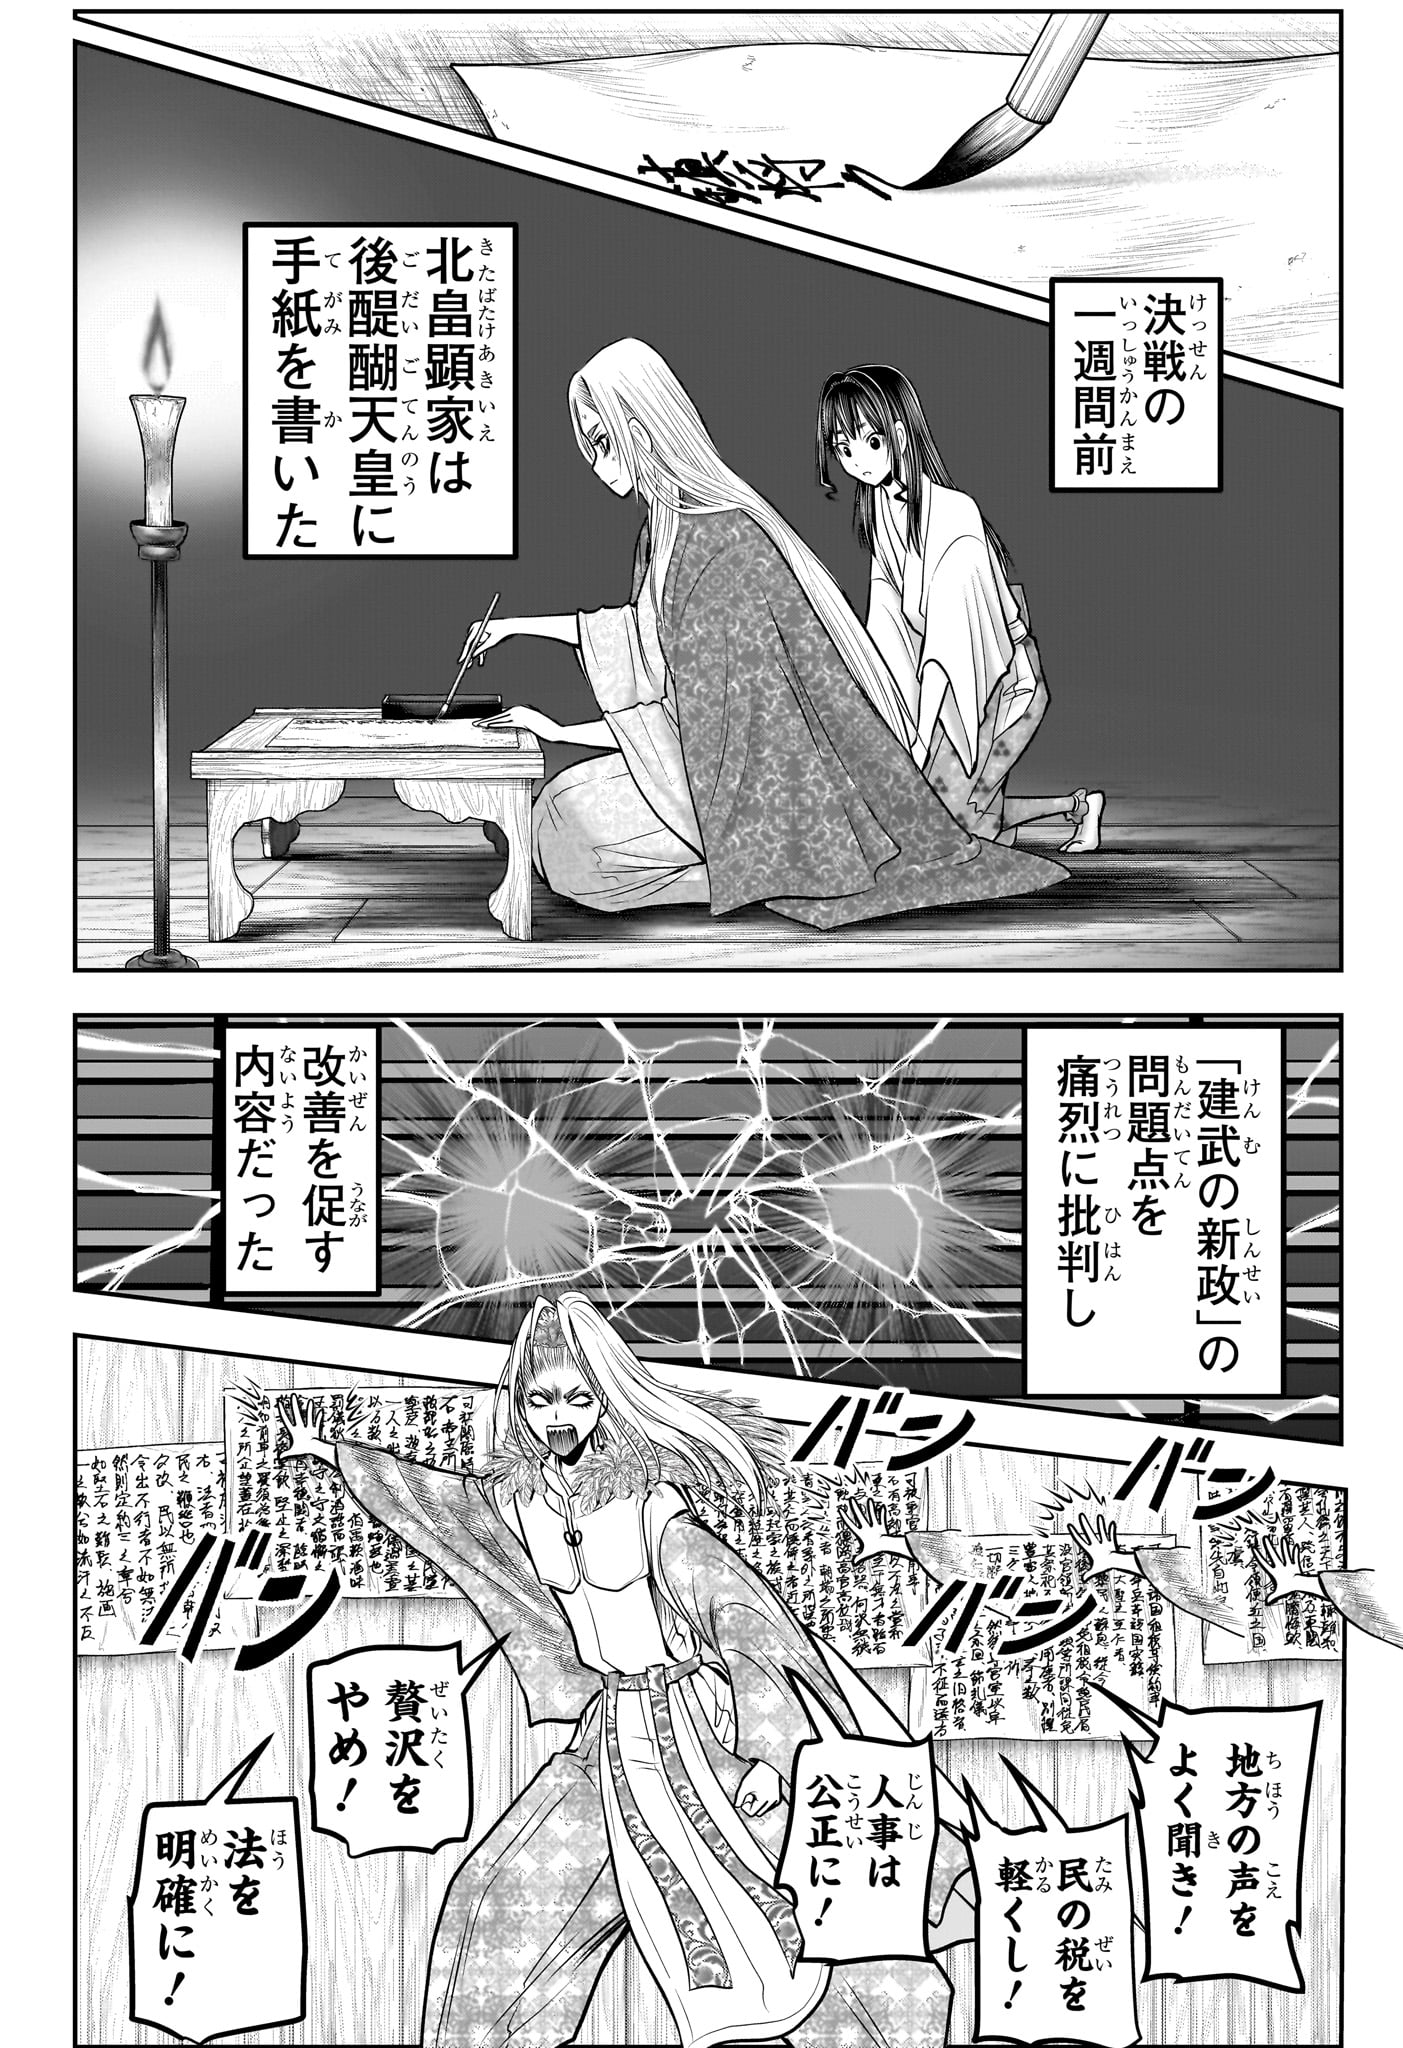 Nige Jouzu no Wakagimi - Chapter 156 - Page 12